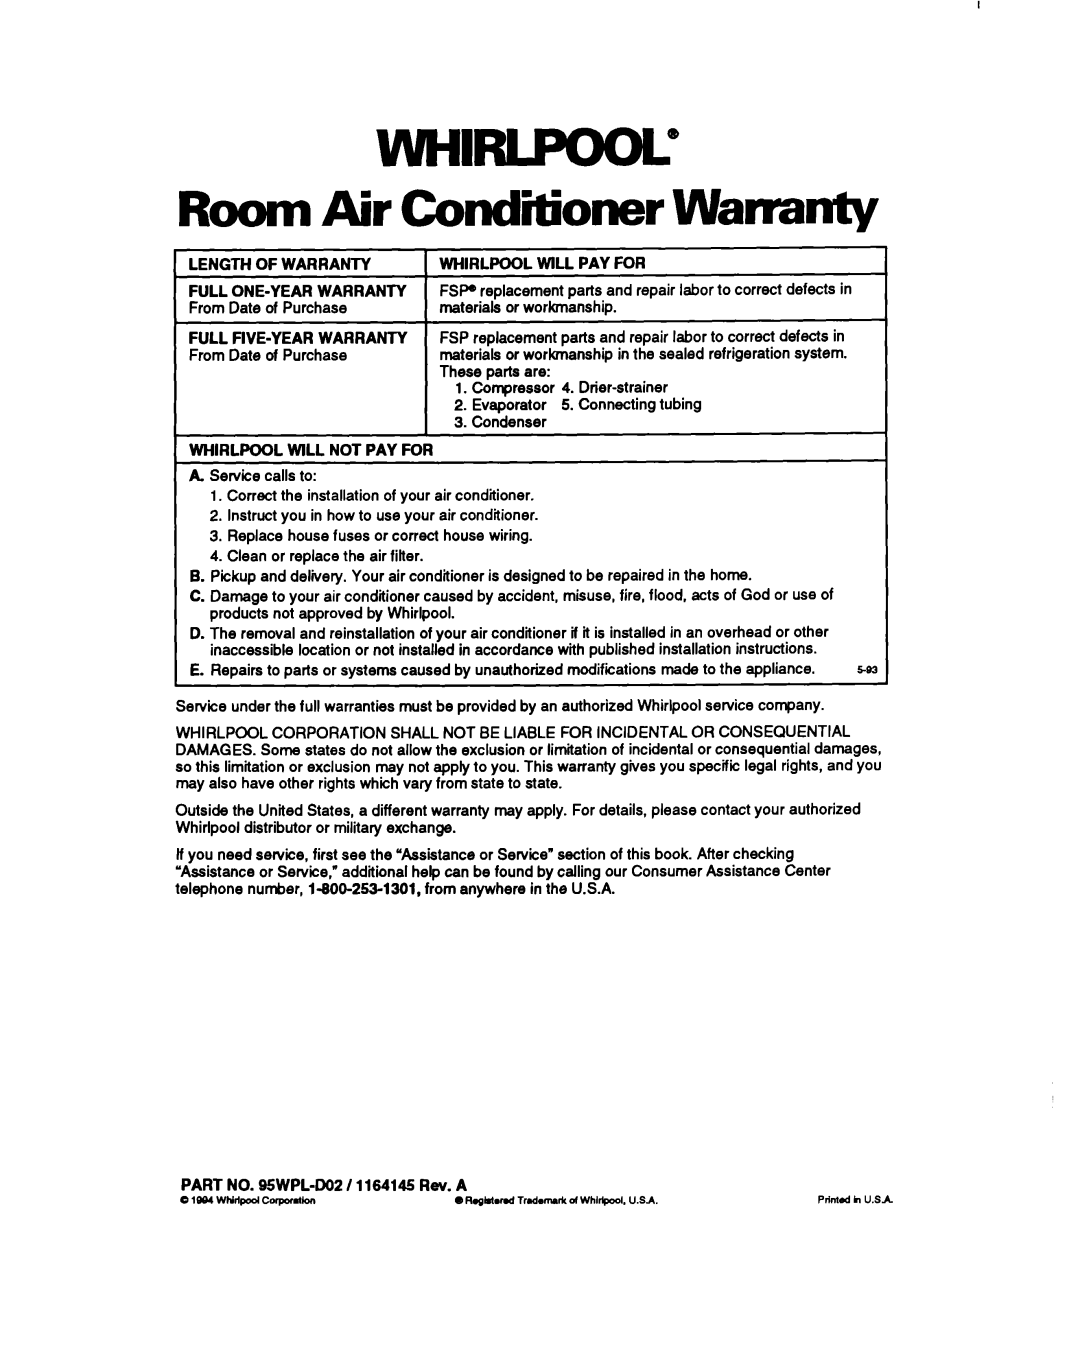 Whirlpool ACSIOZ ACS520 warranty vvHlF?LPooc, Room Air Conditioner Warranty 